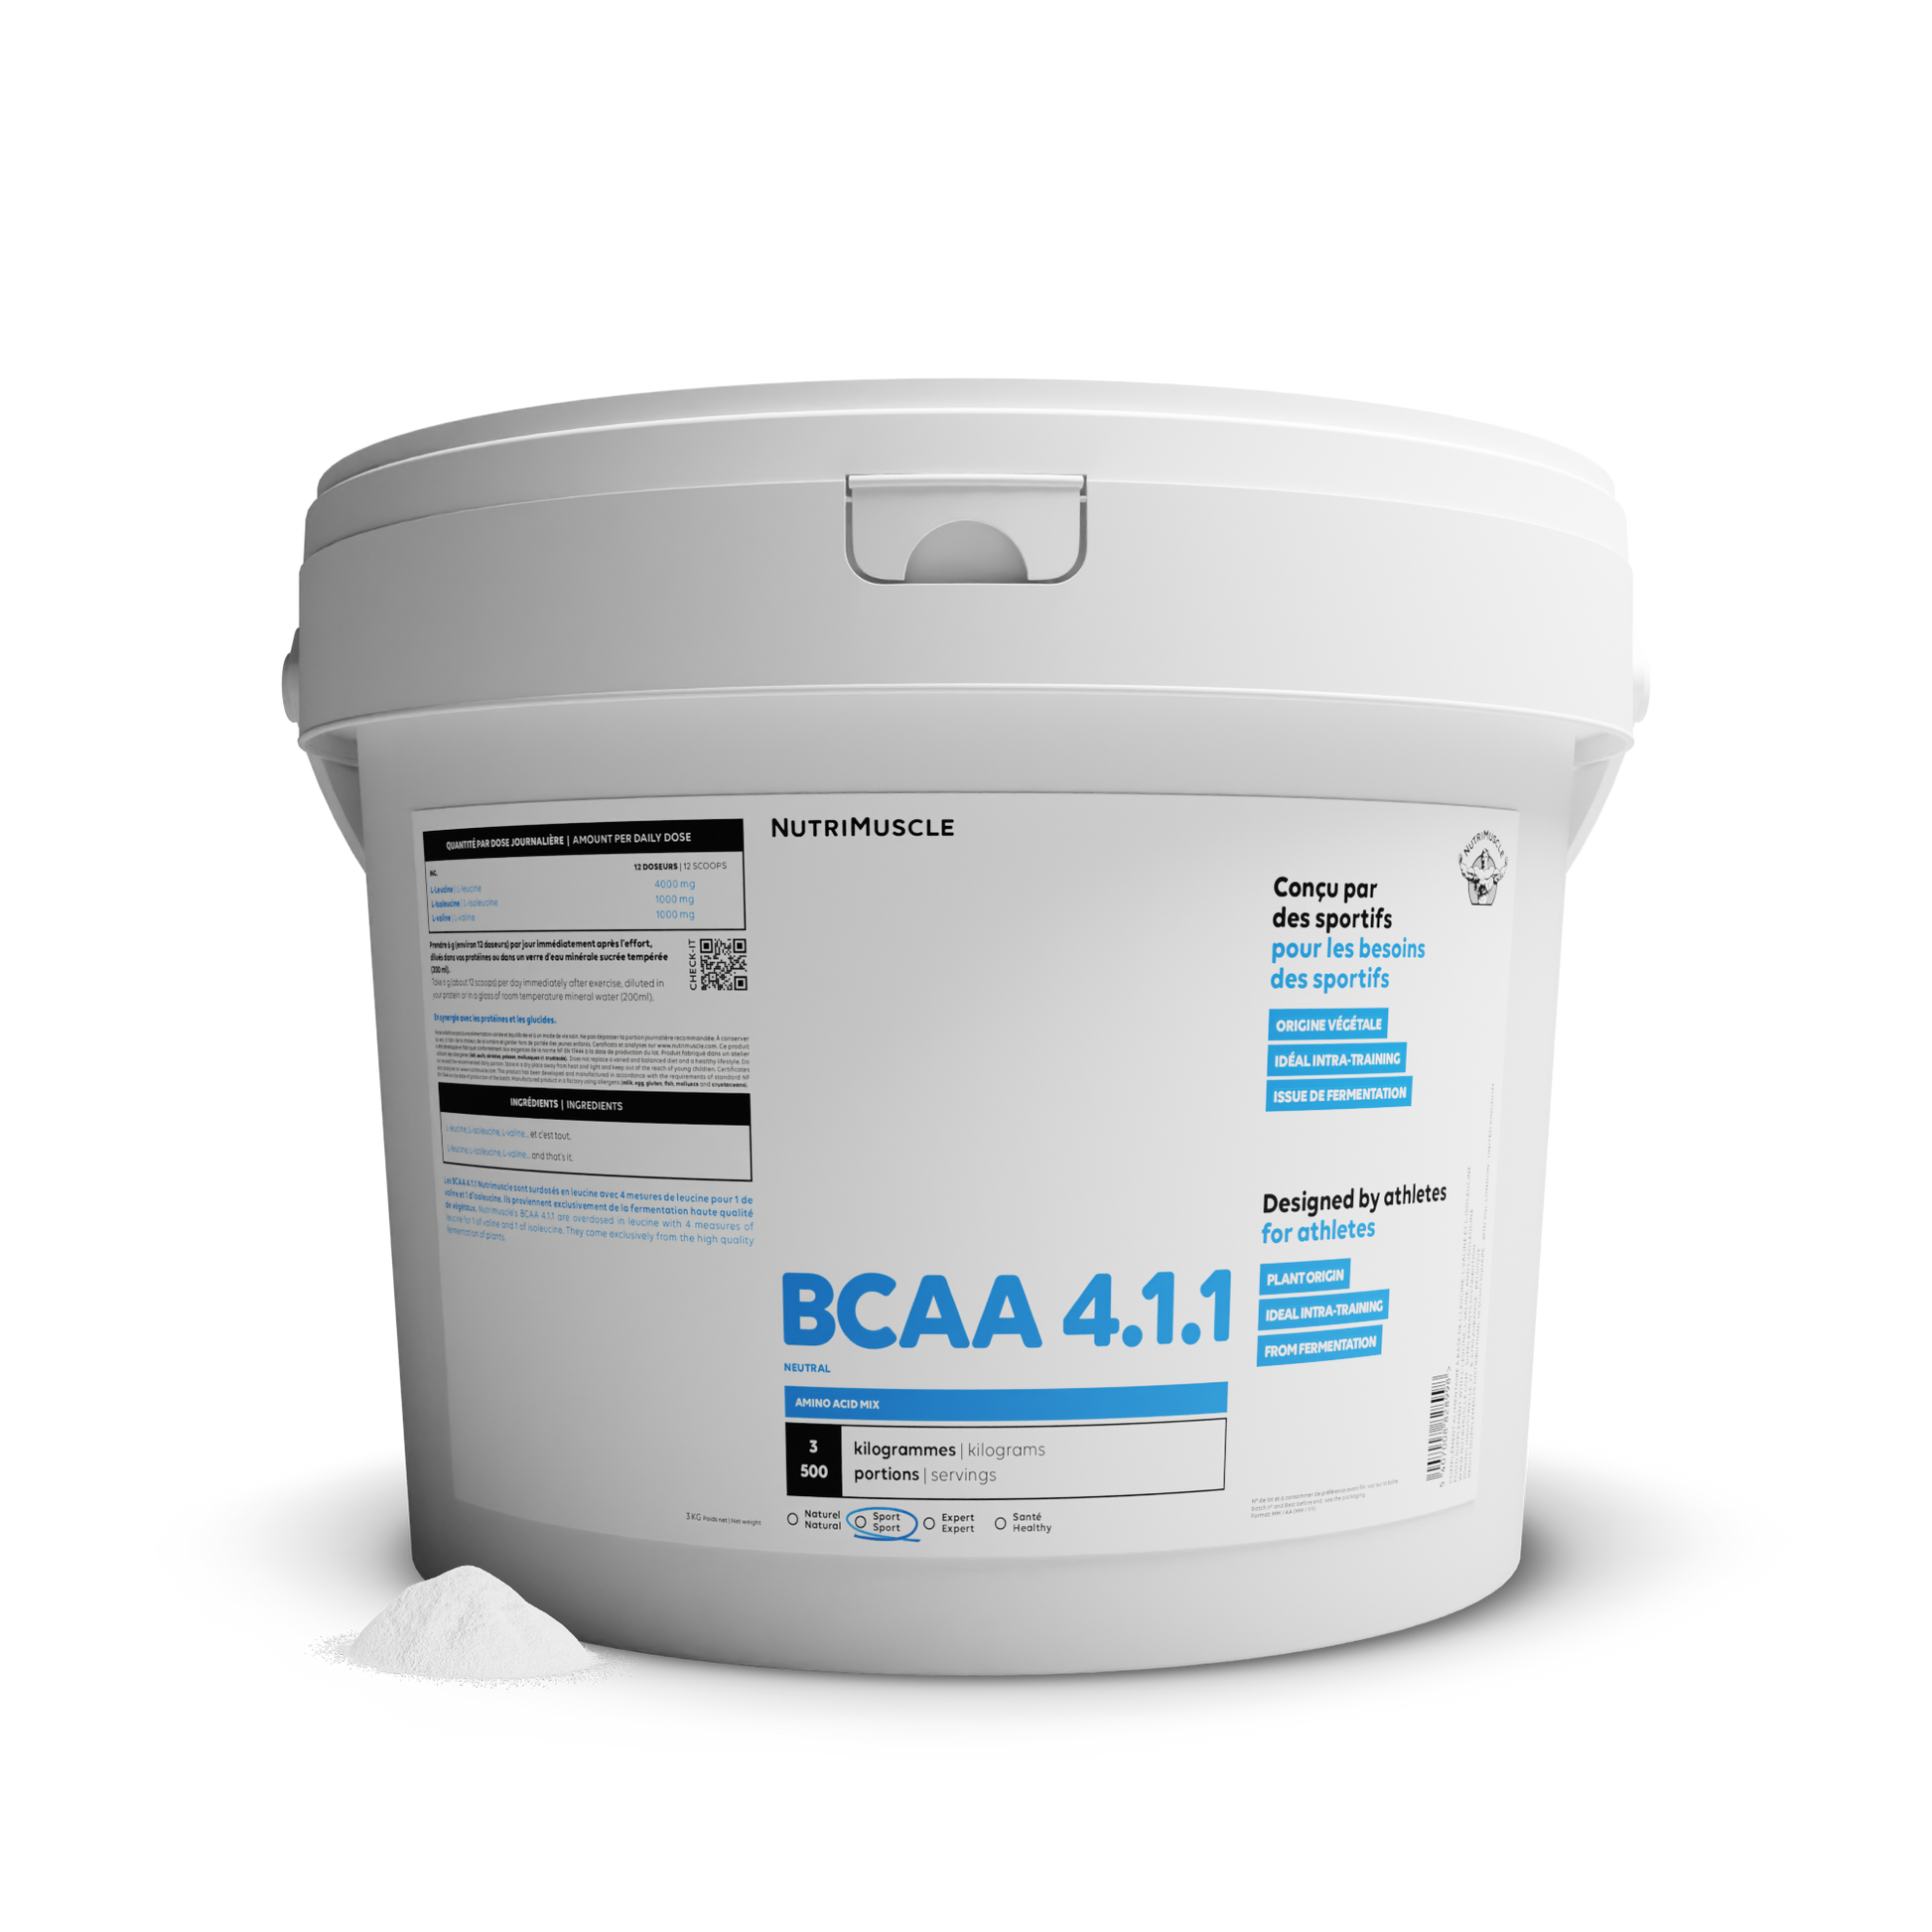 BCAA 4.1.1 Powder manufacturers